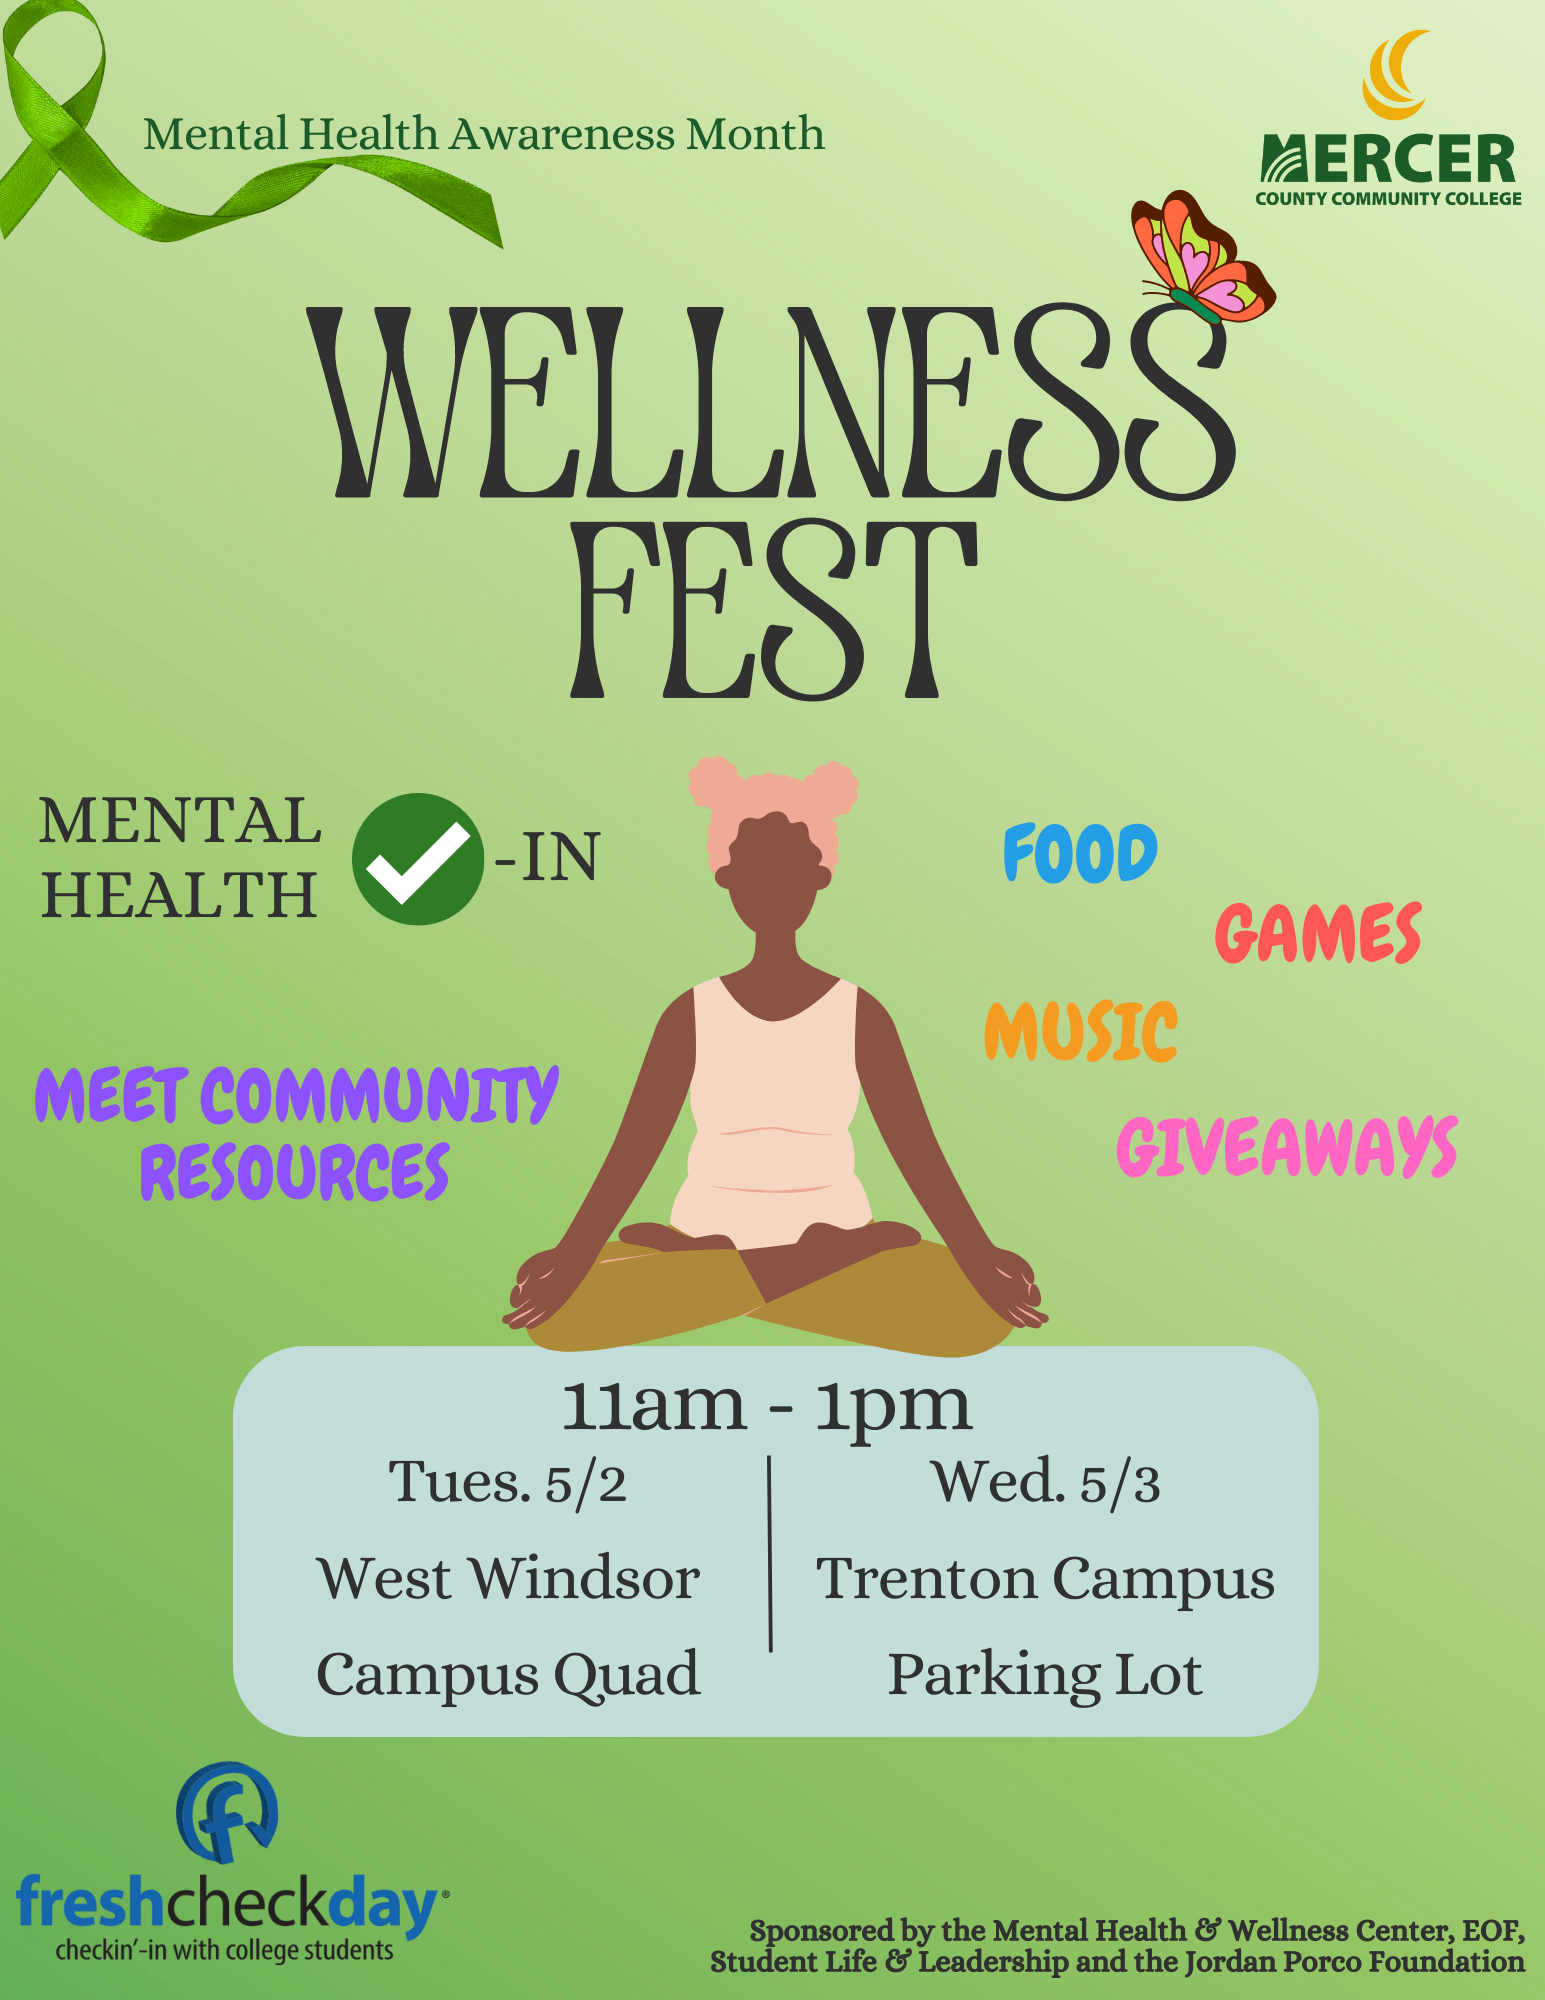 MCCC Wellness Fest